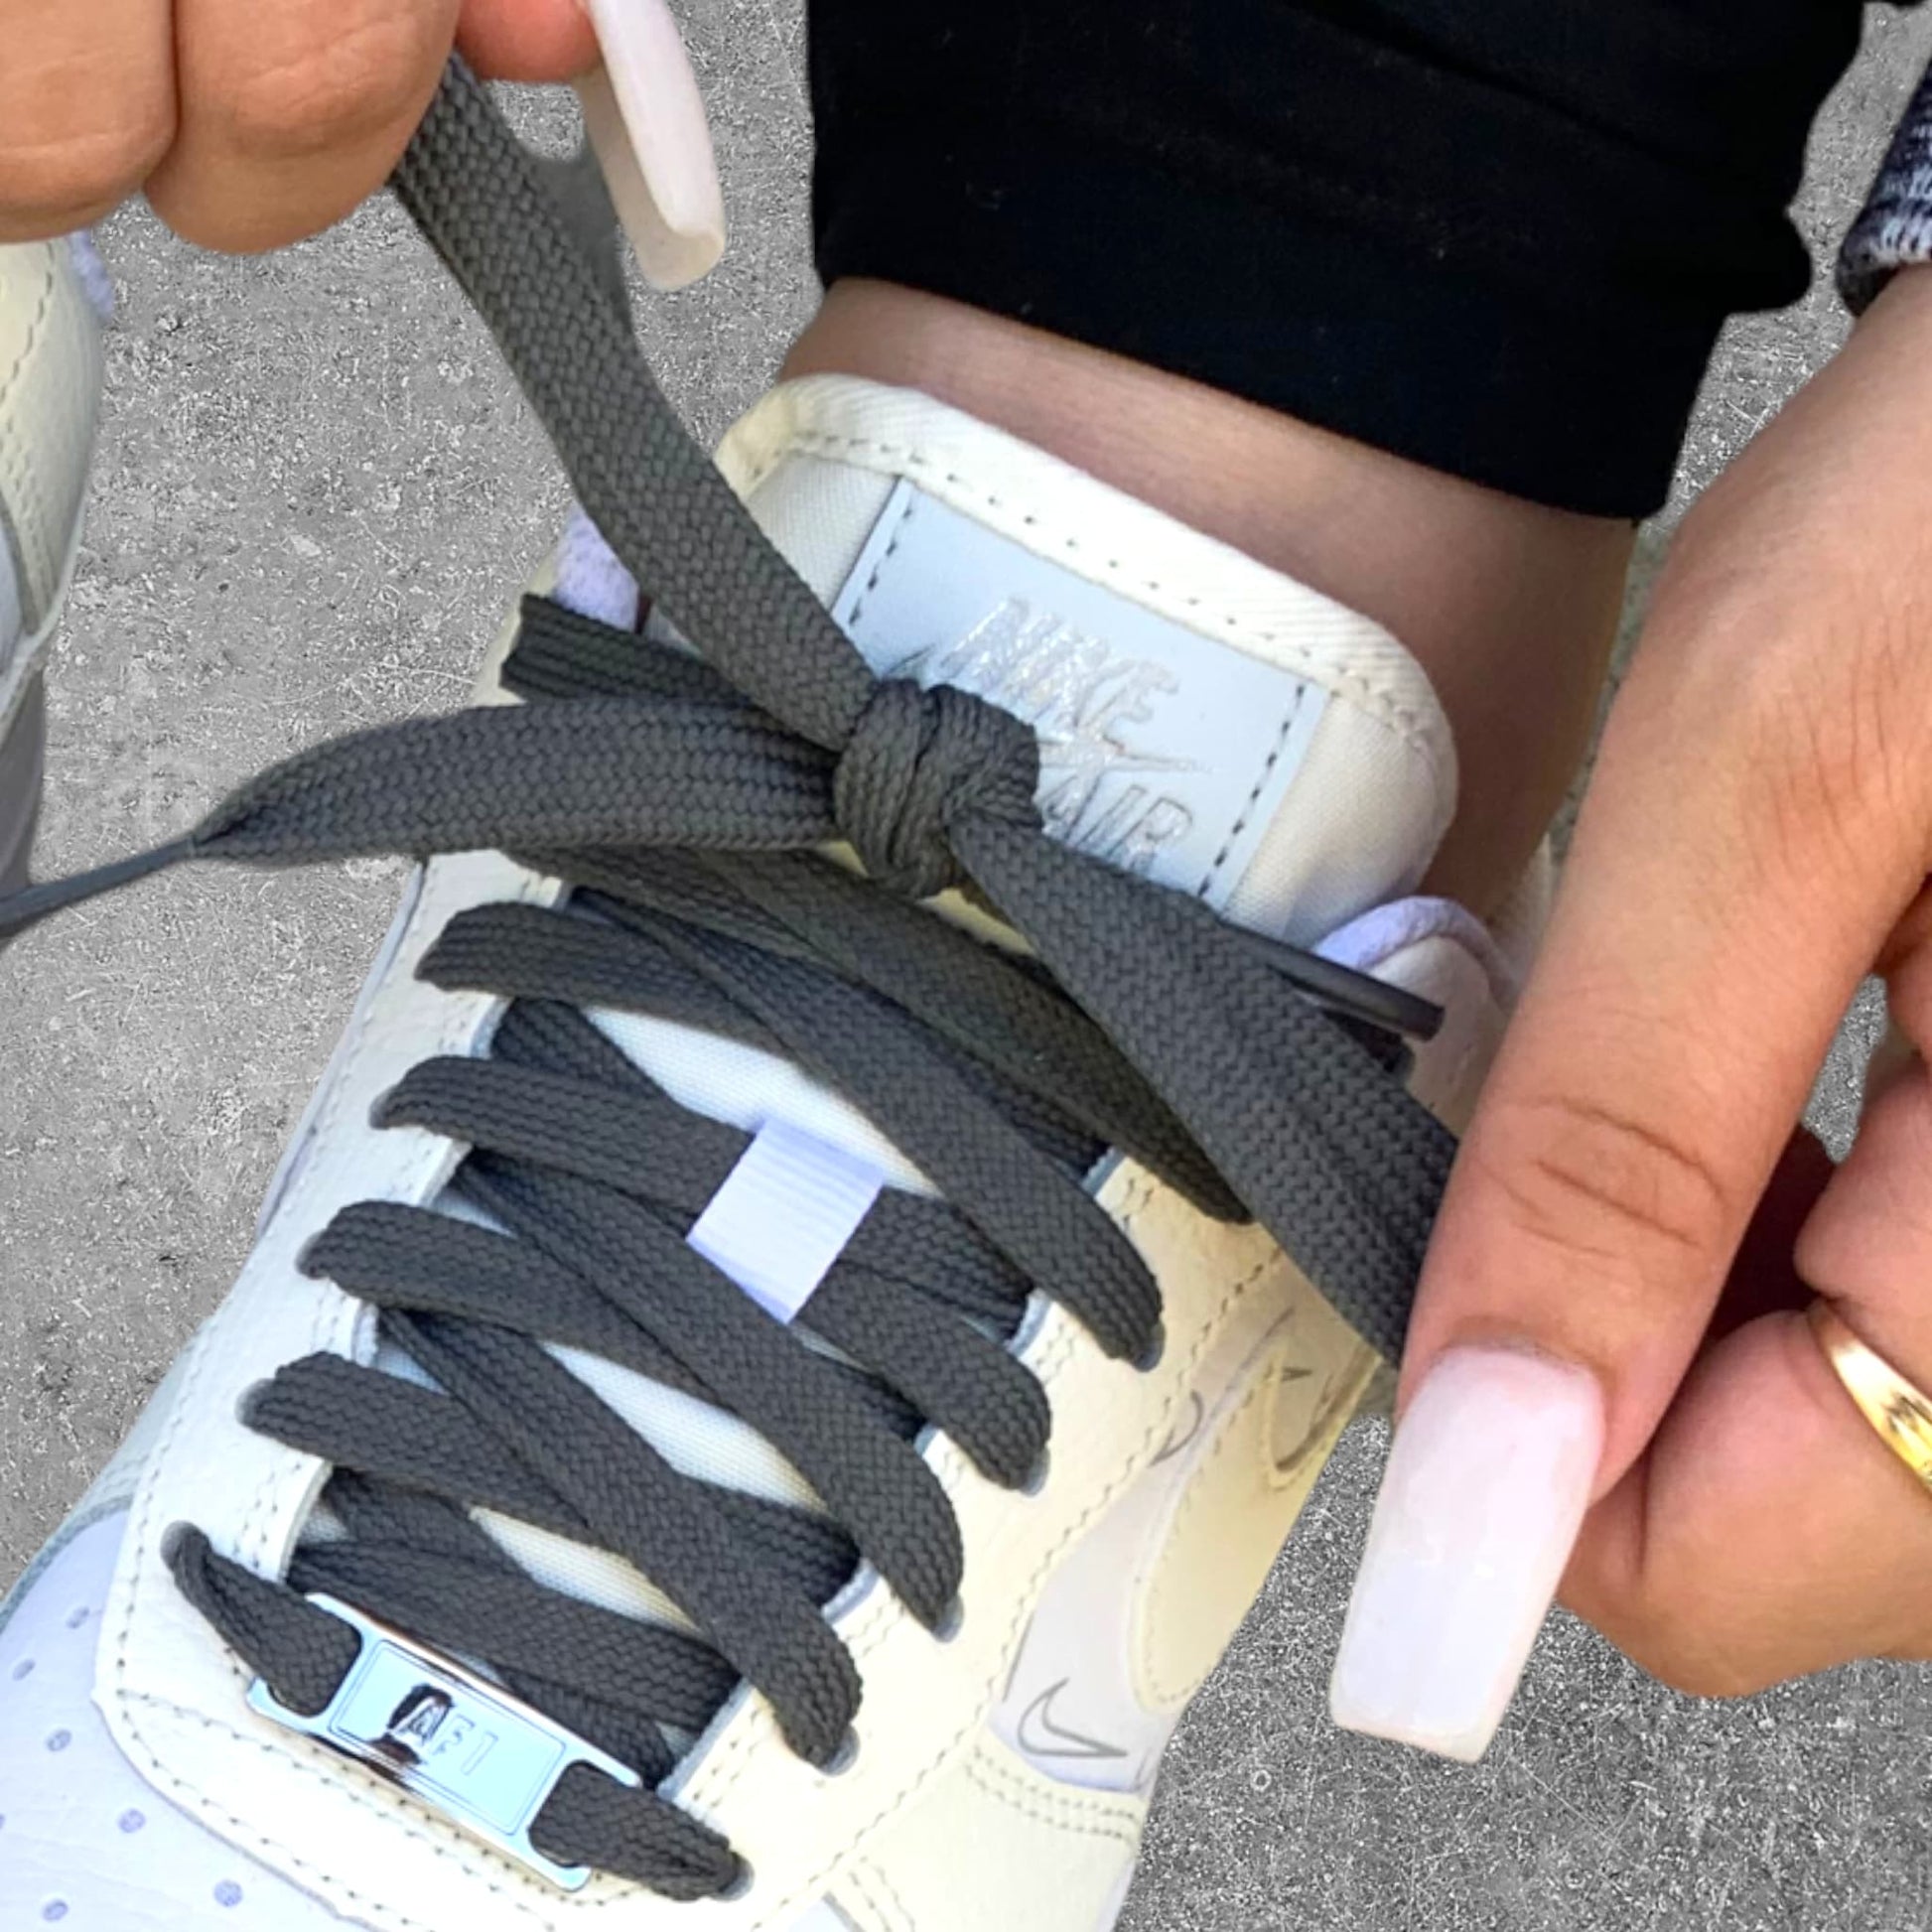 GAME Grey Shoelaces in sneakers being tied 